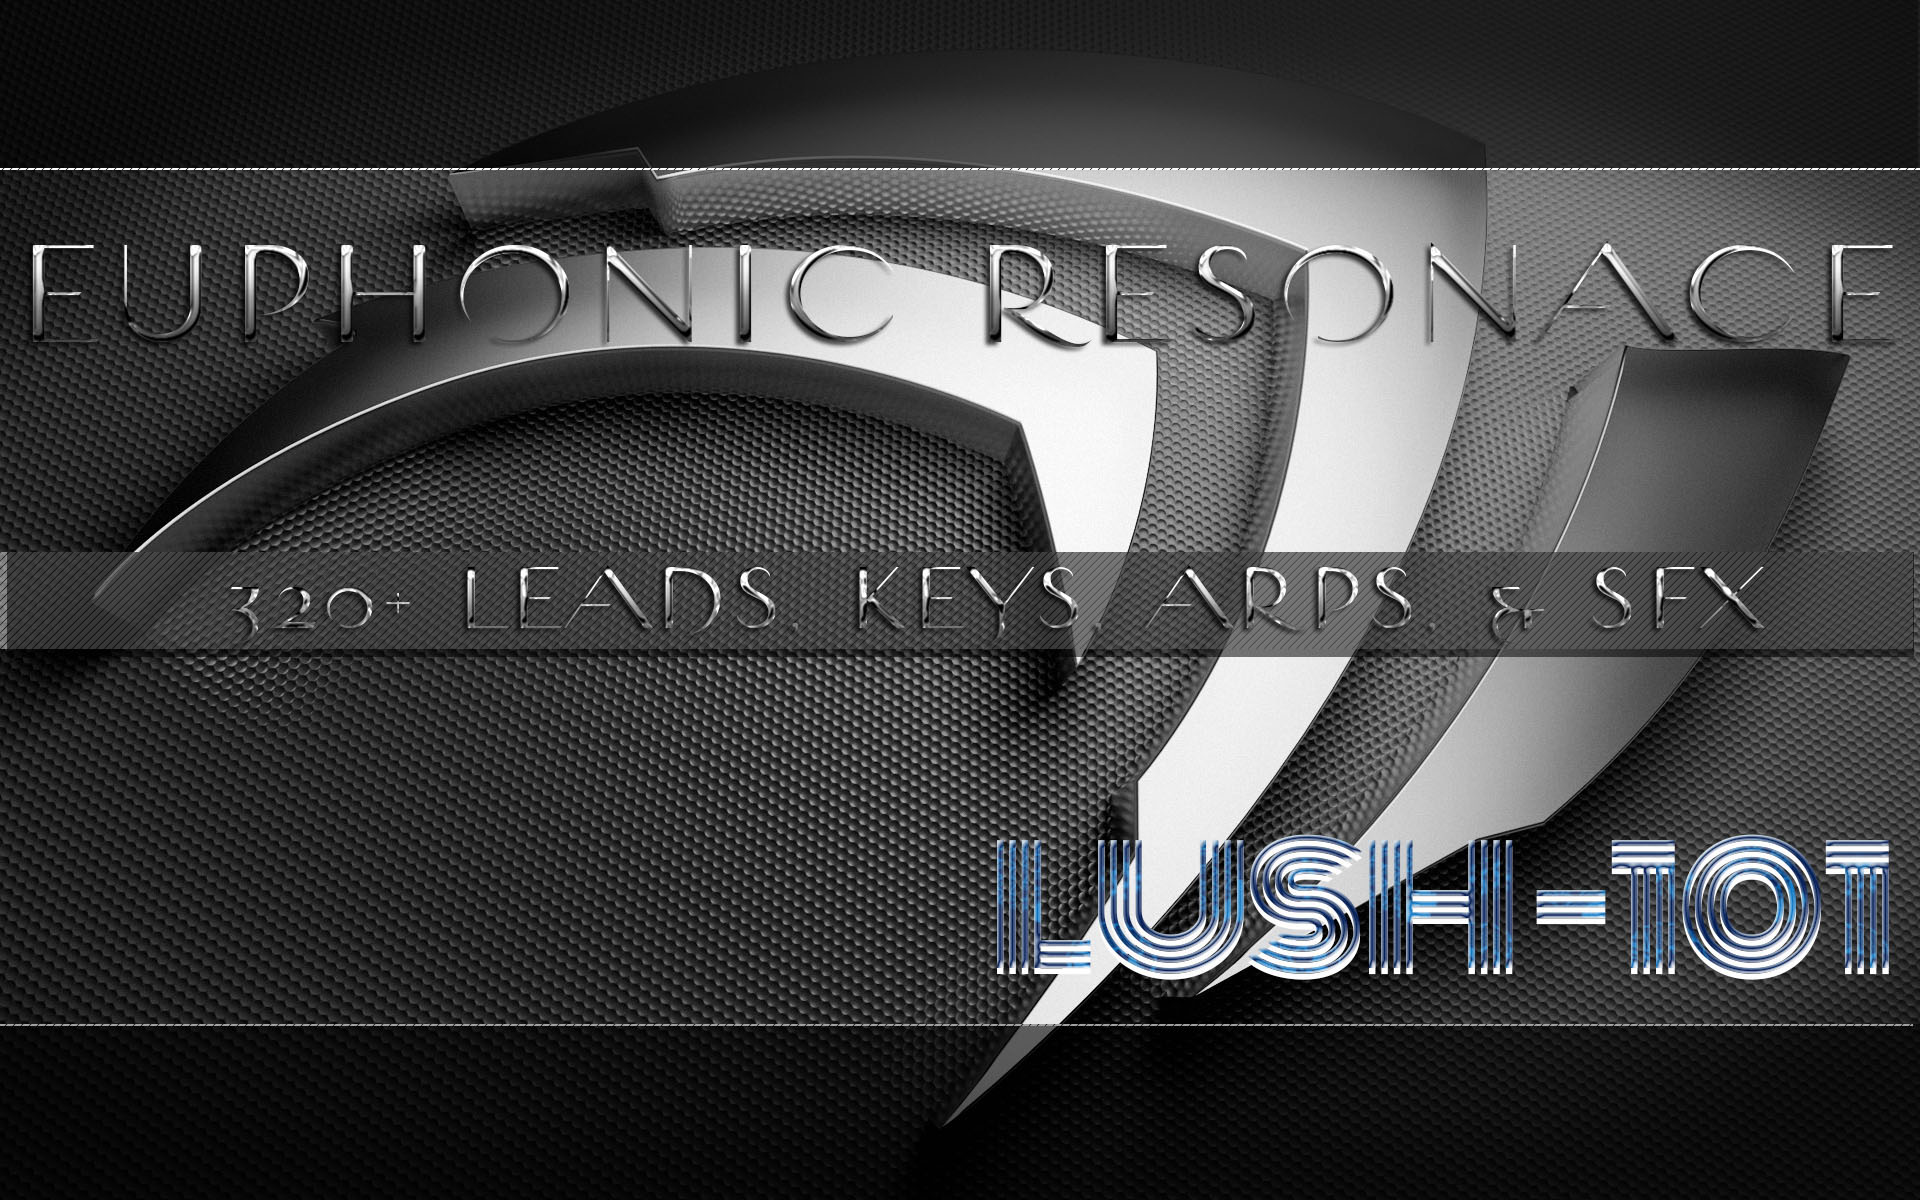 Euphonic Resonance Soundset for LuSH-101